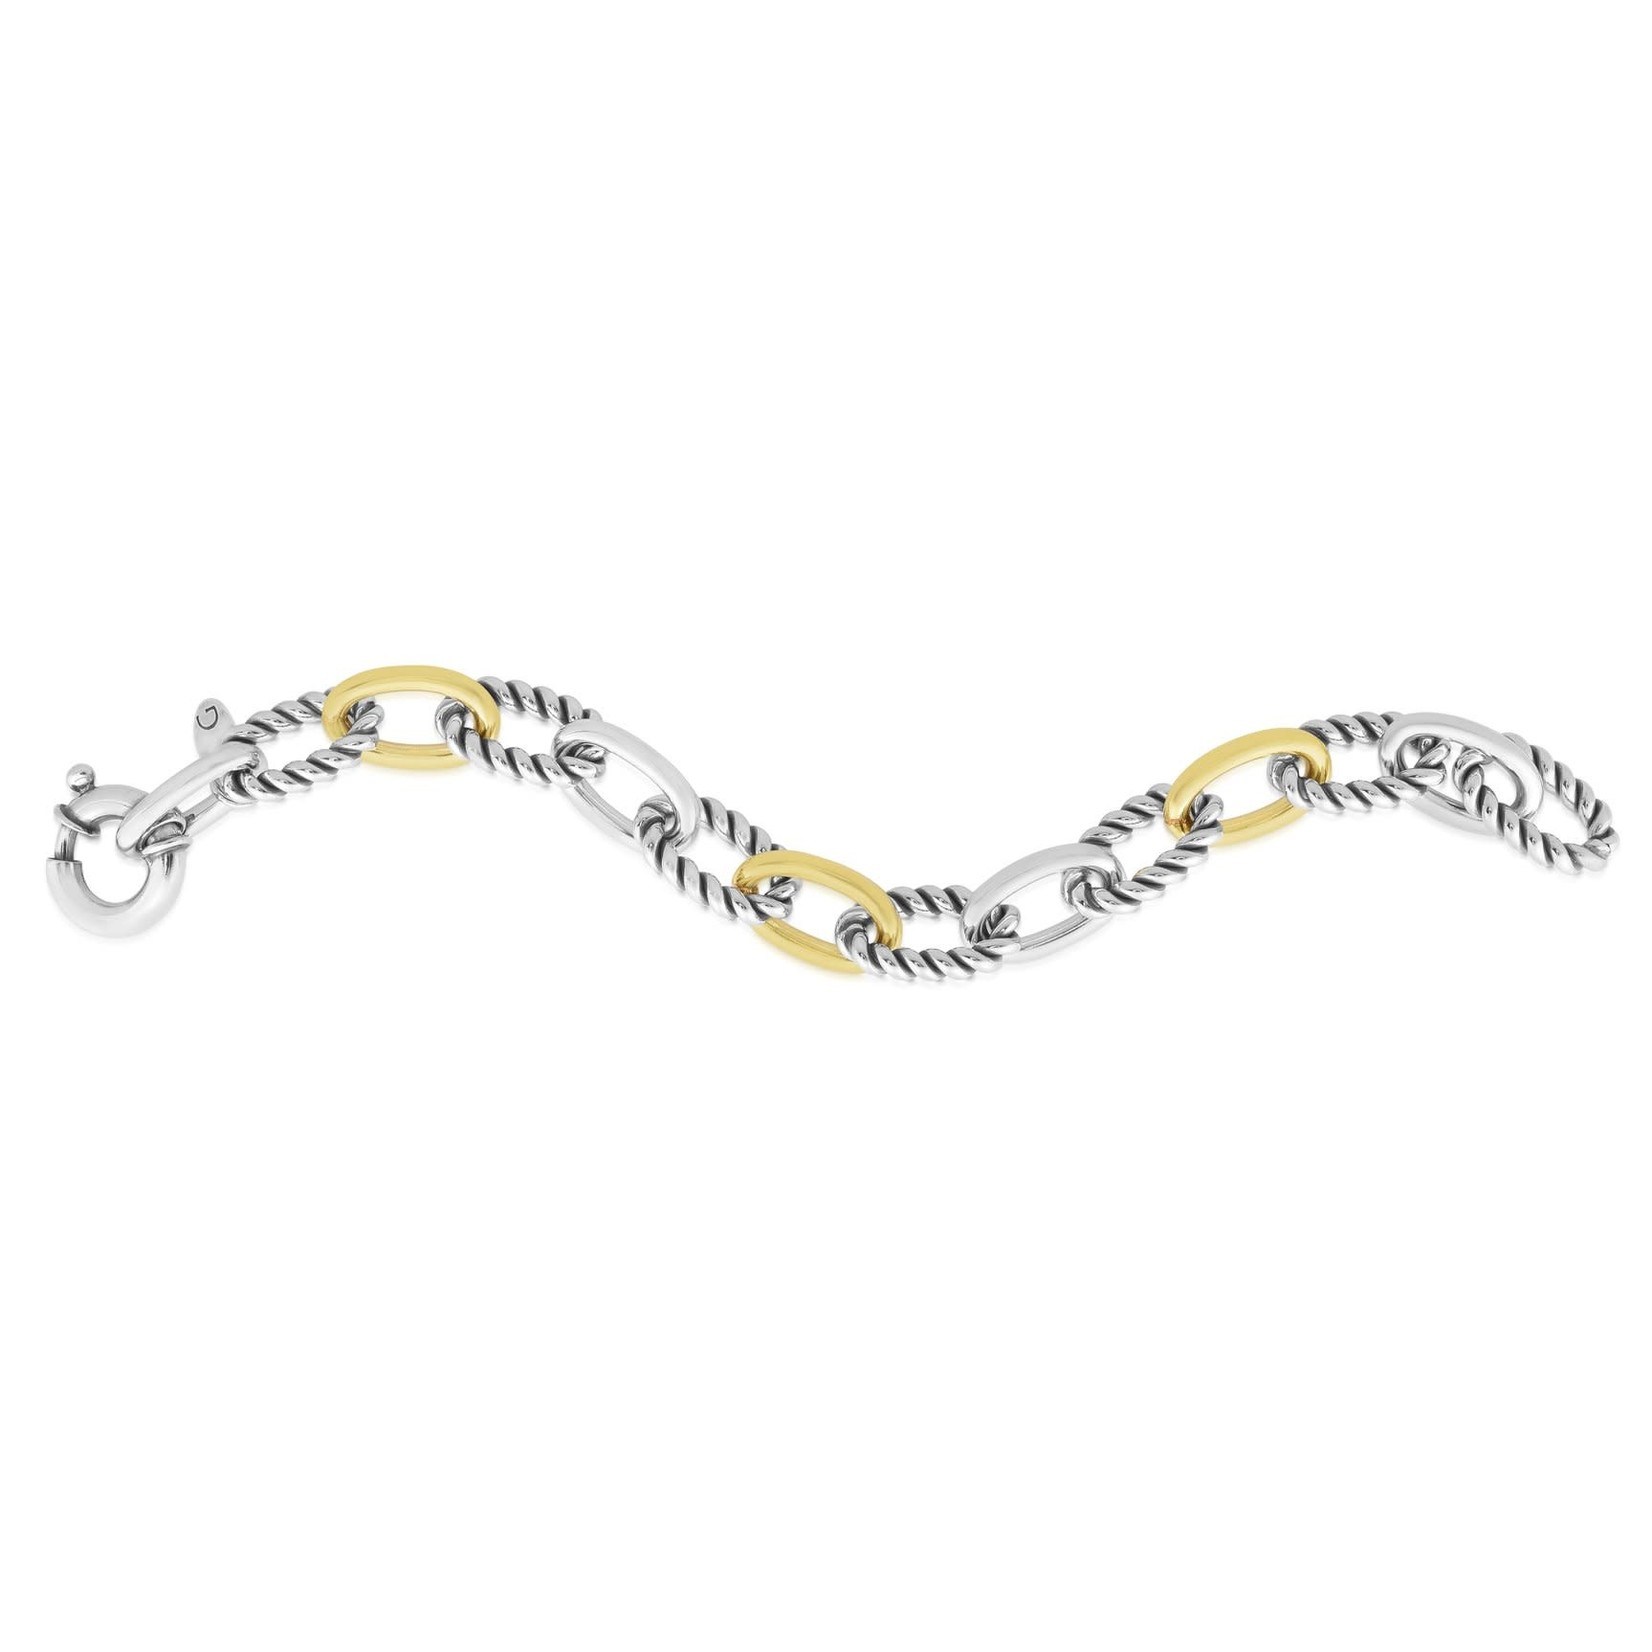 Sterling Silver & 18KY Gold Oval Cable Link Bracelet